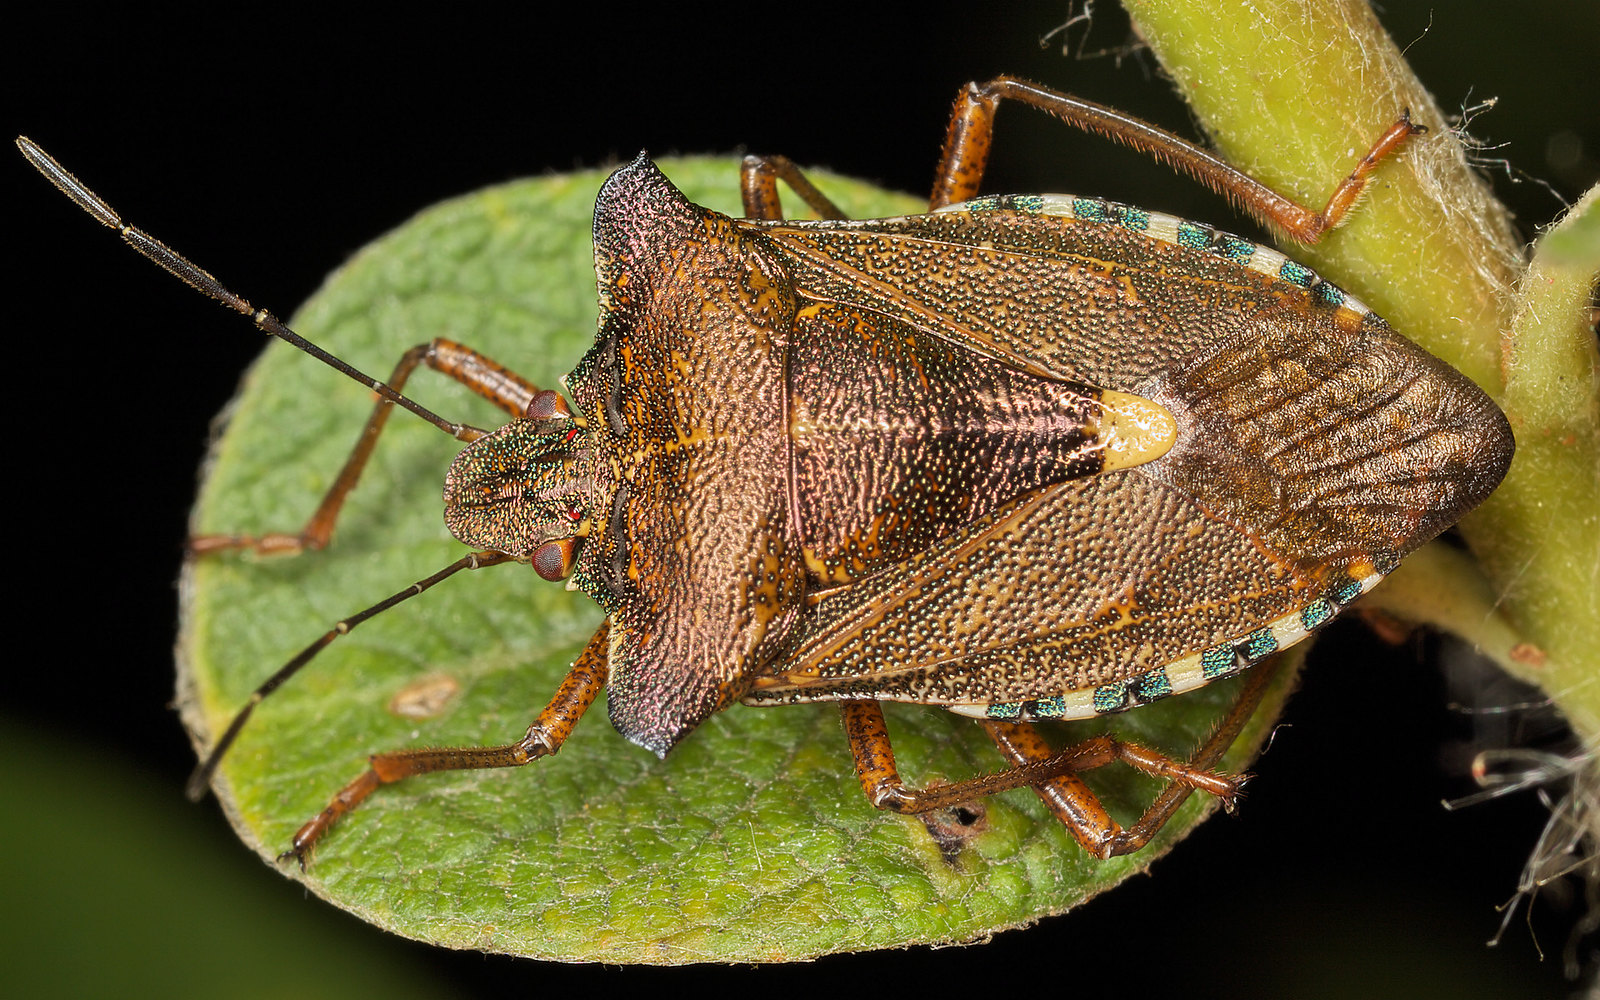 a close up of a bug